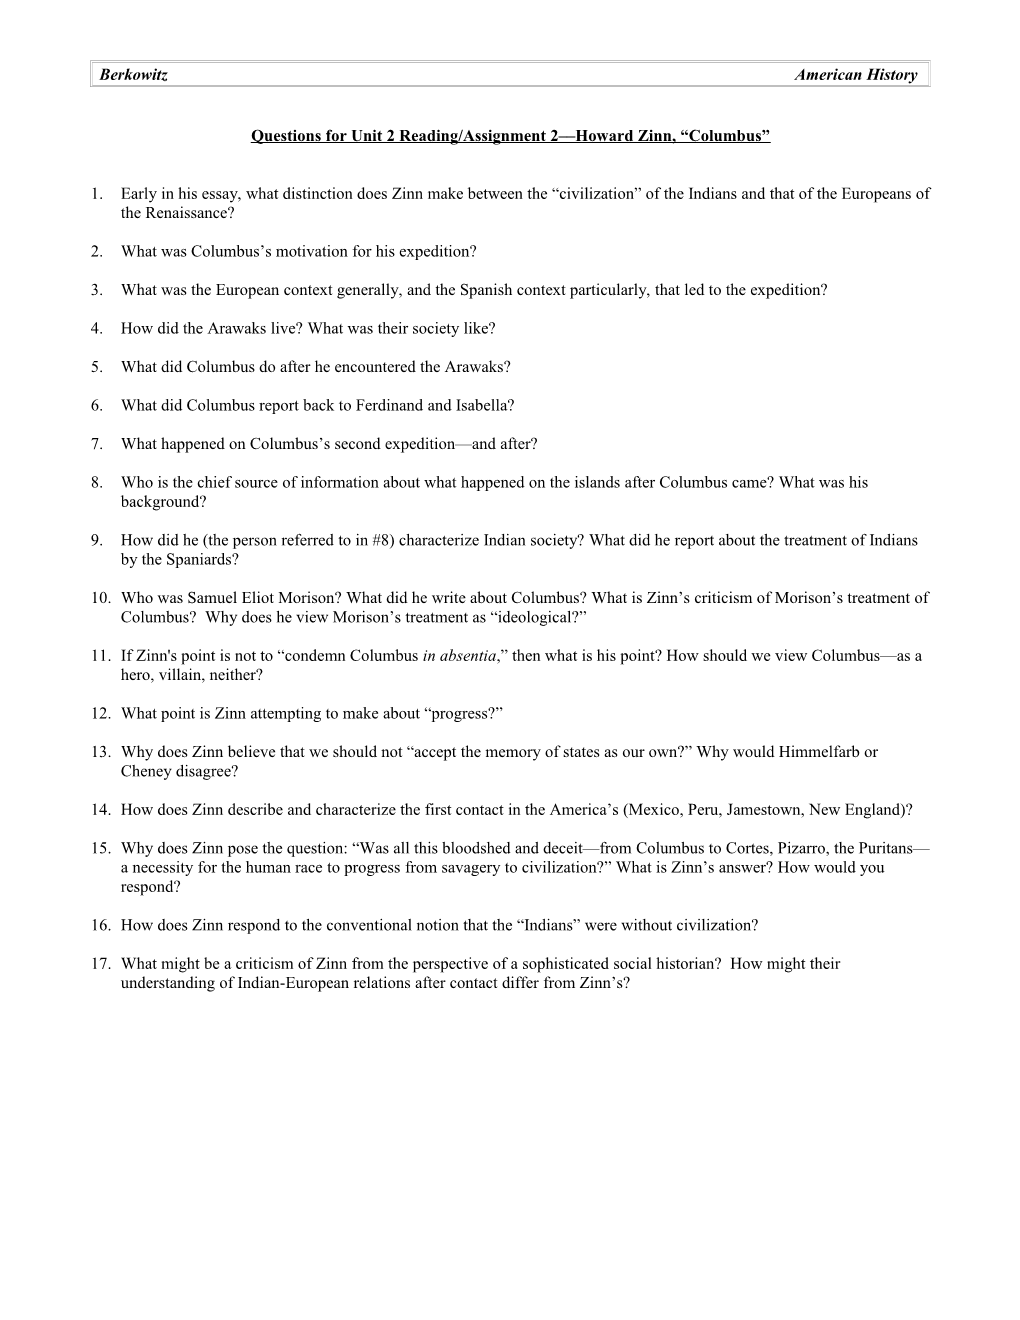 Questions for Unit 2 Reading/Assignment 3 Howard Zinn, Columbus